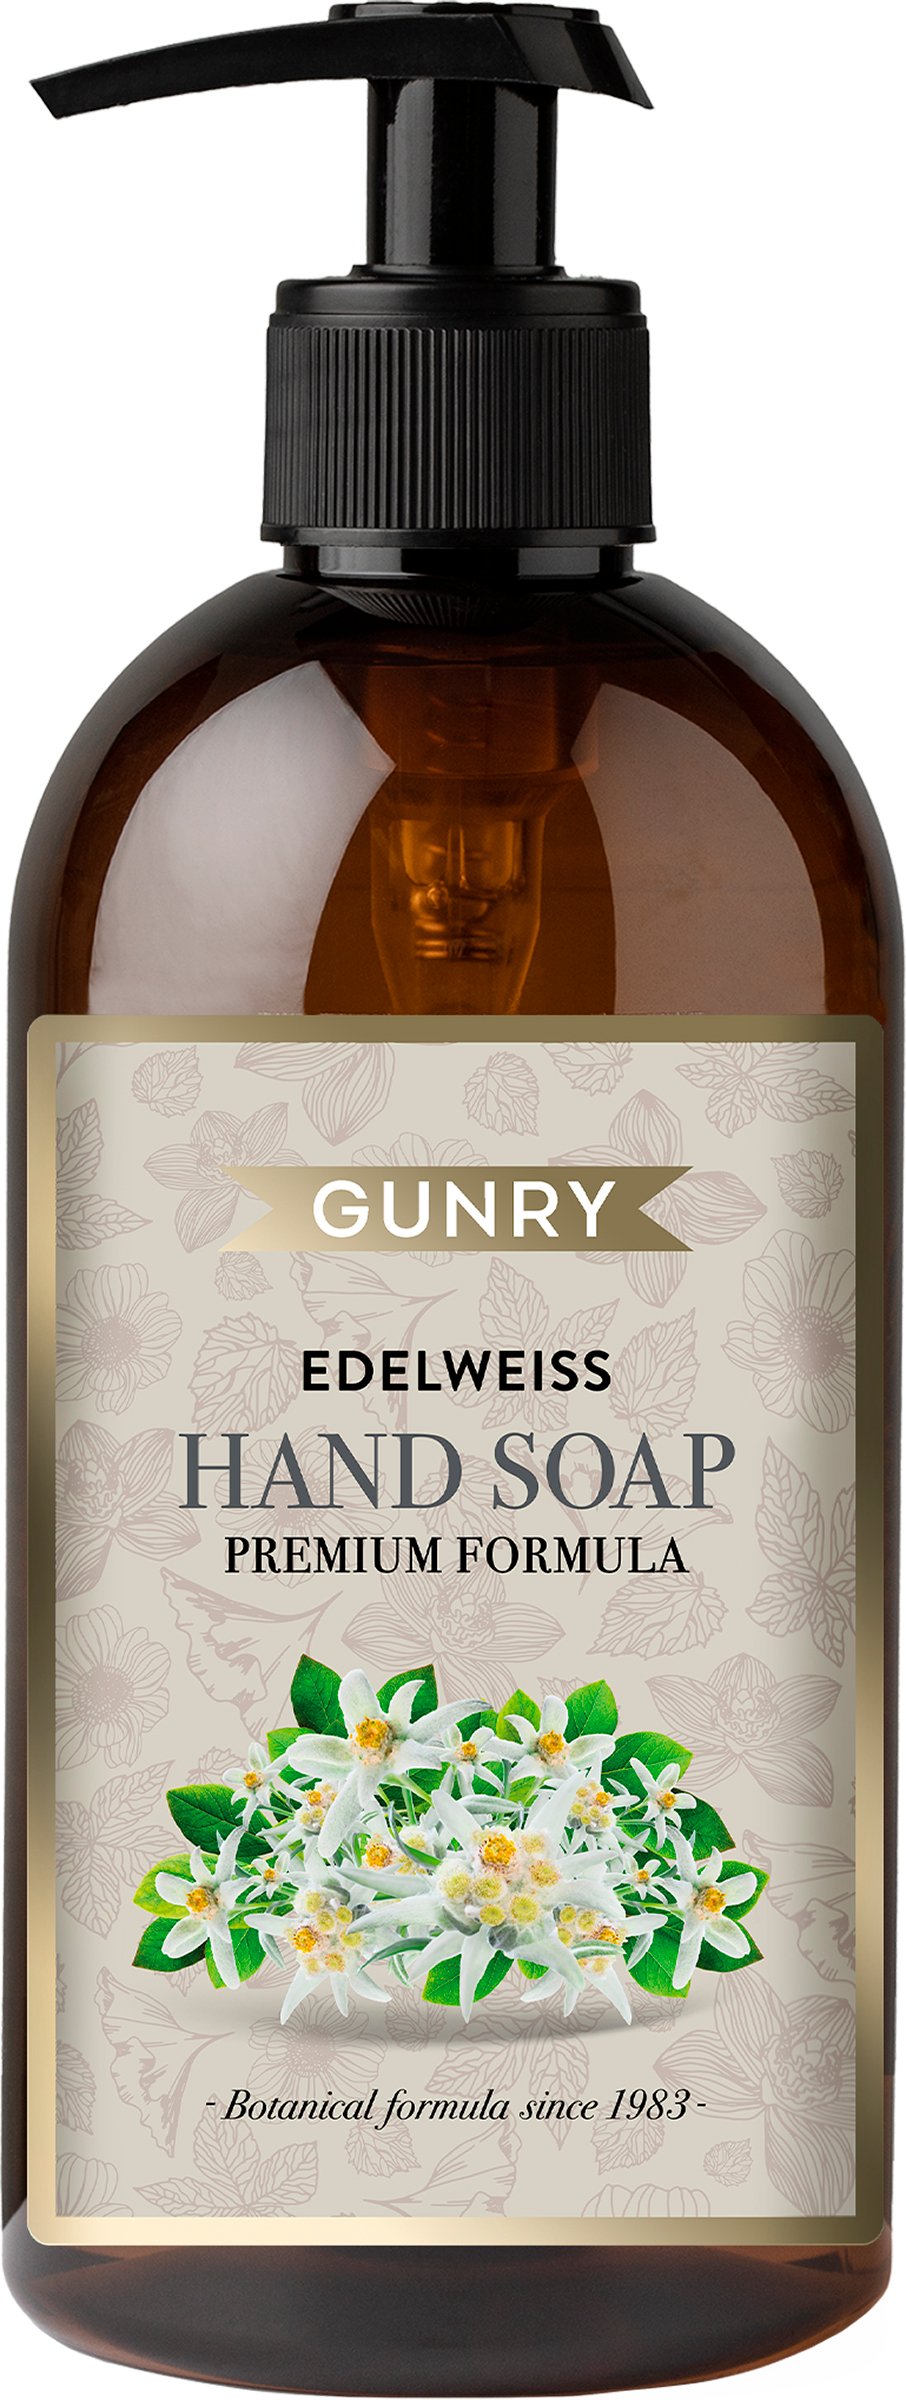 Gunry Edelweiss Hand Soap 500 ml